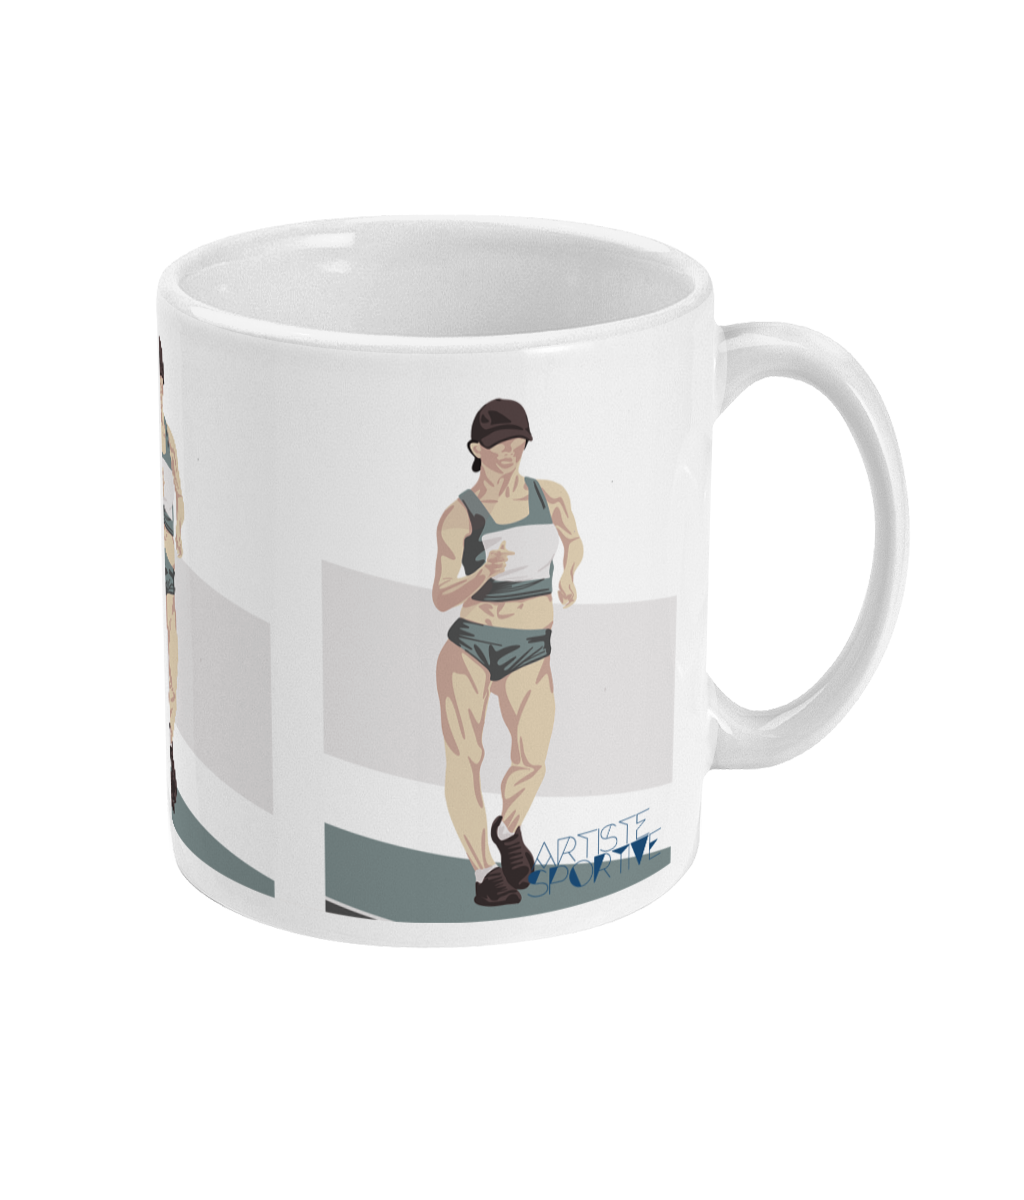 “Woman walking” athletics mug to personalize